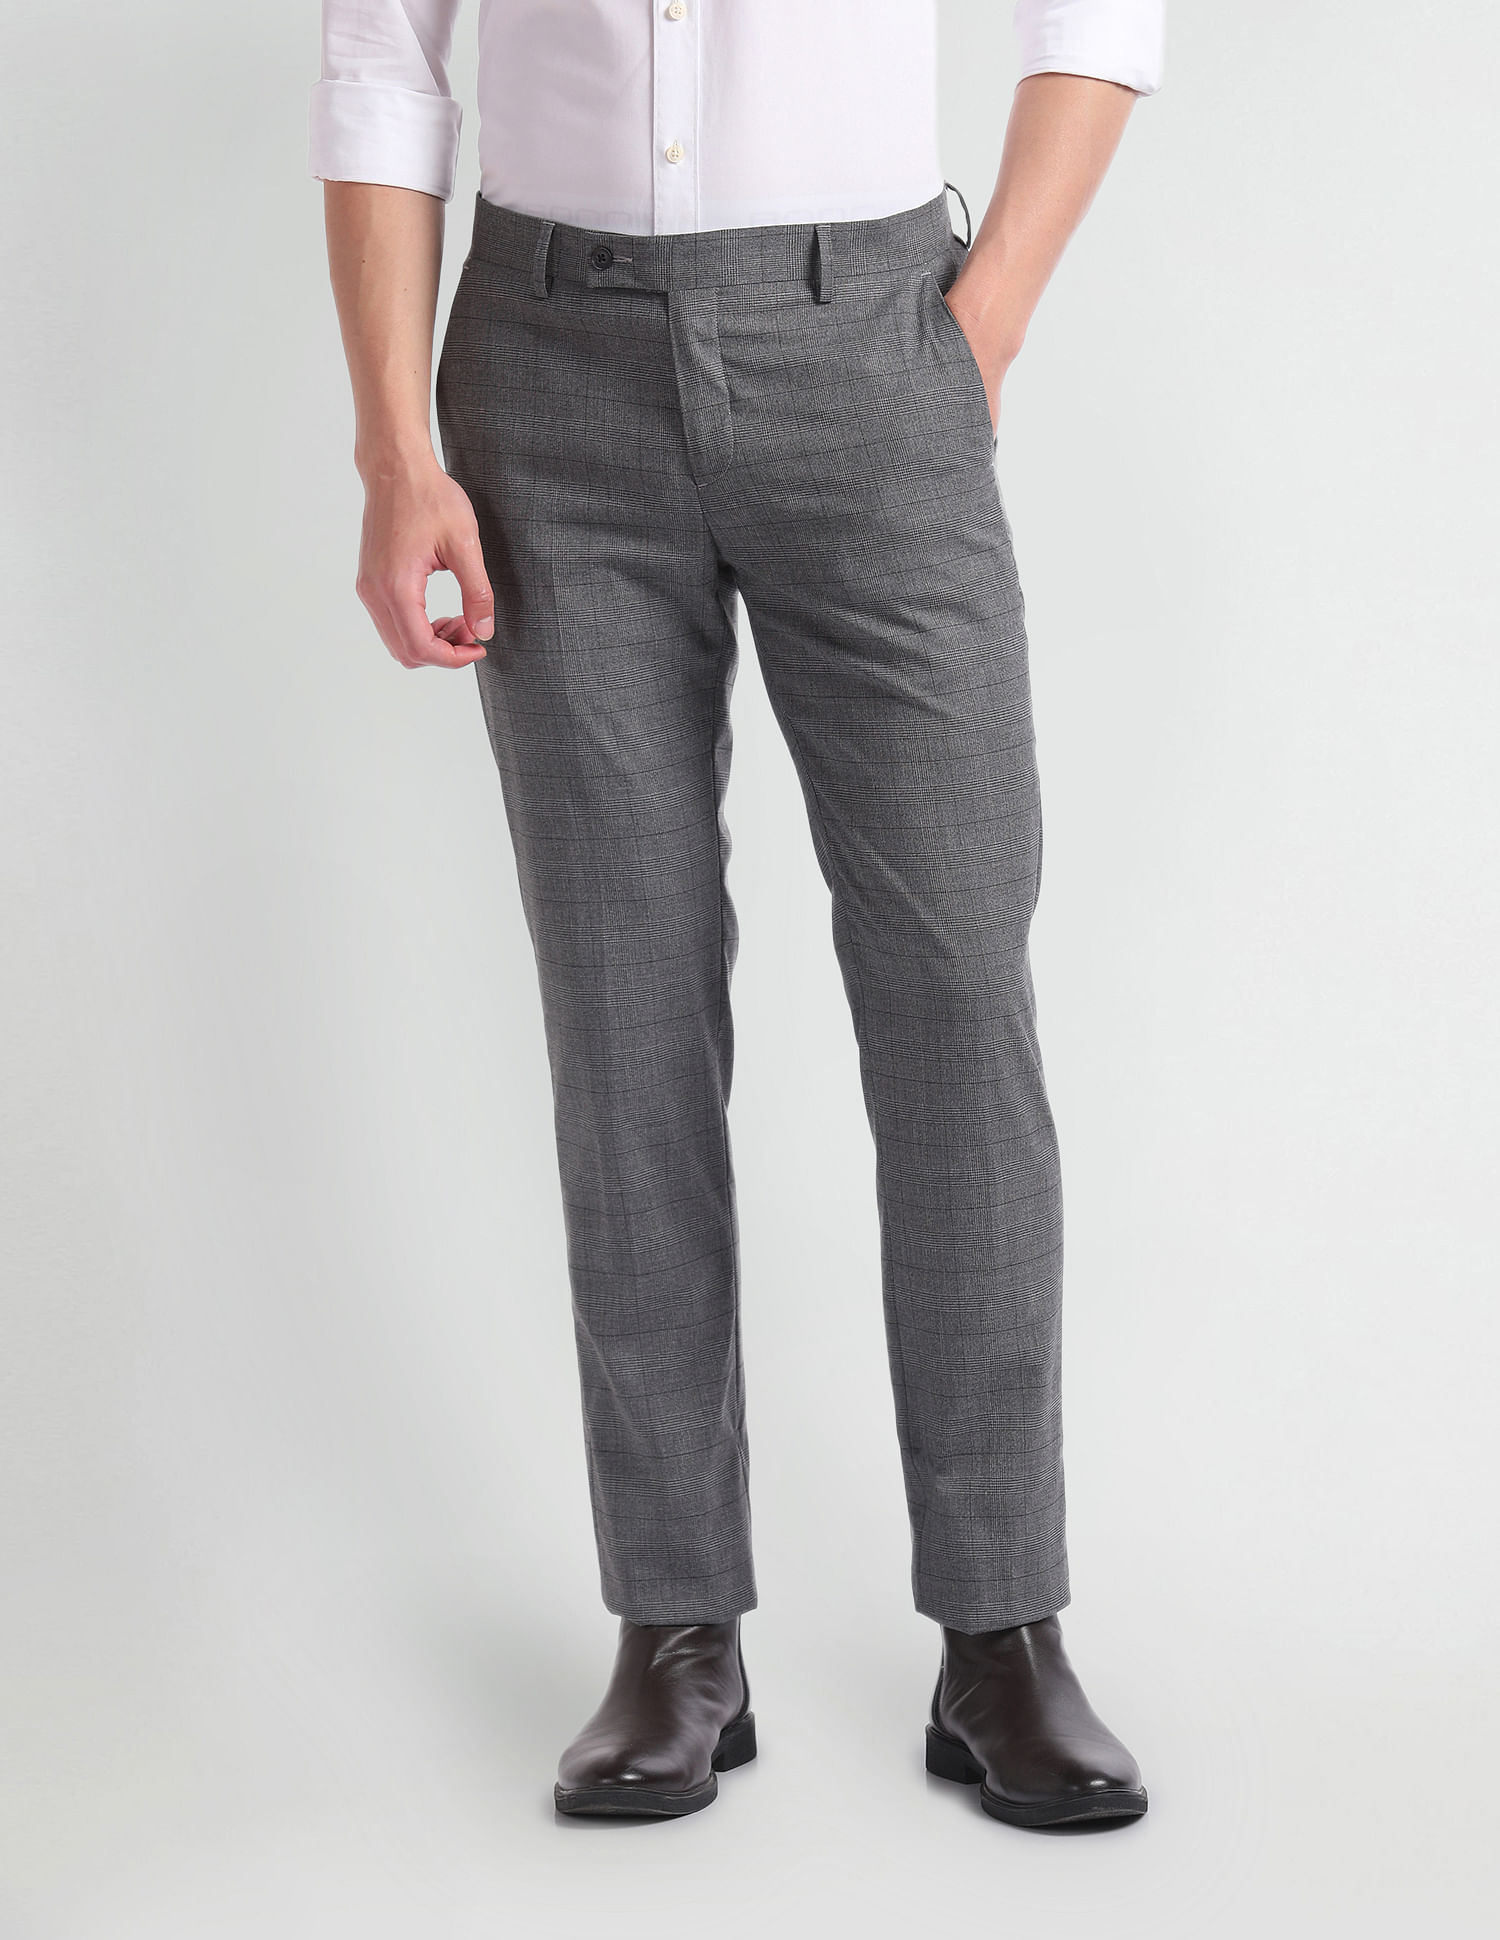 New Autumn Classic Men's Suit Pants Business Fashion Black Blue Elastic  Regular Fit Formal Trousers Male Brand Clothing 38 40 - AliExpress